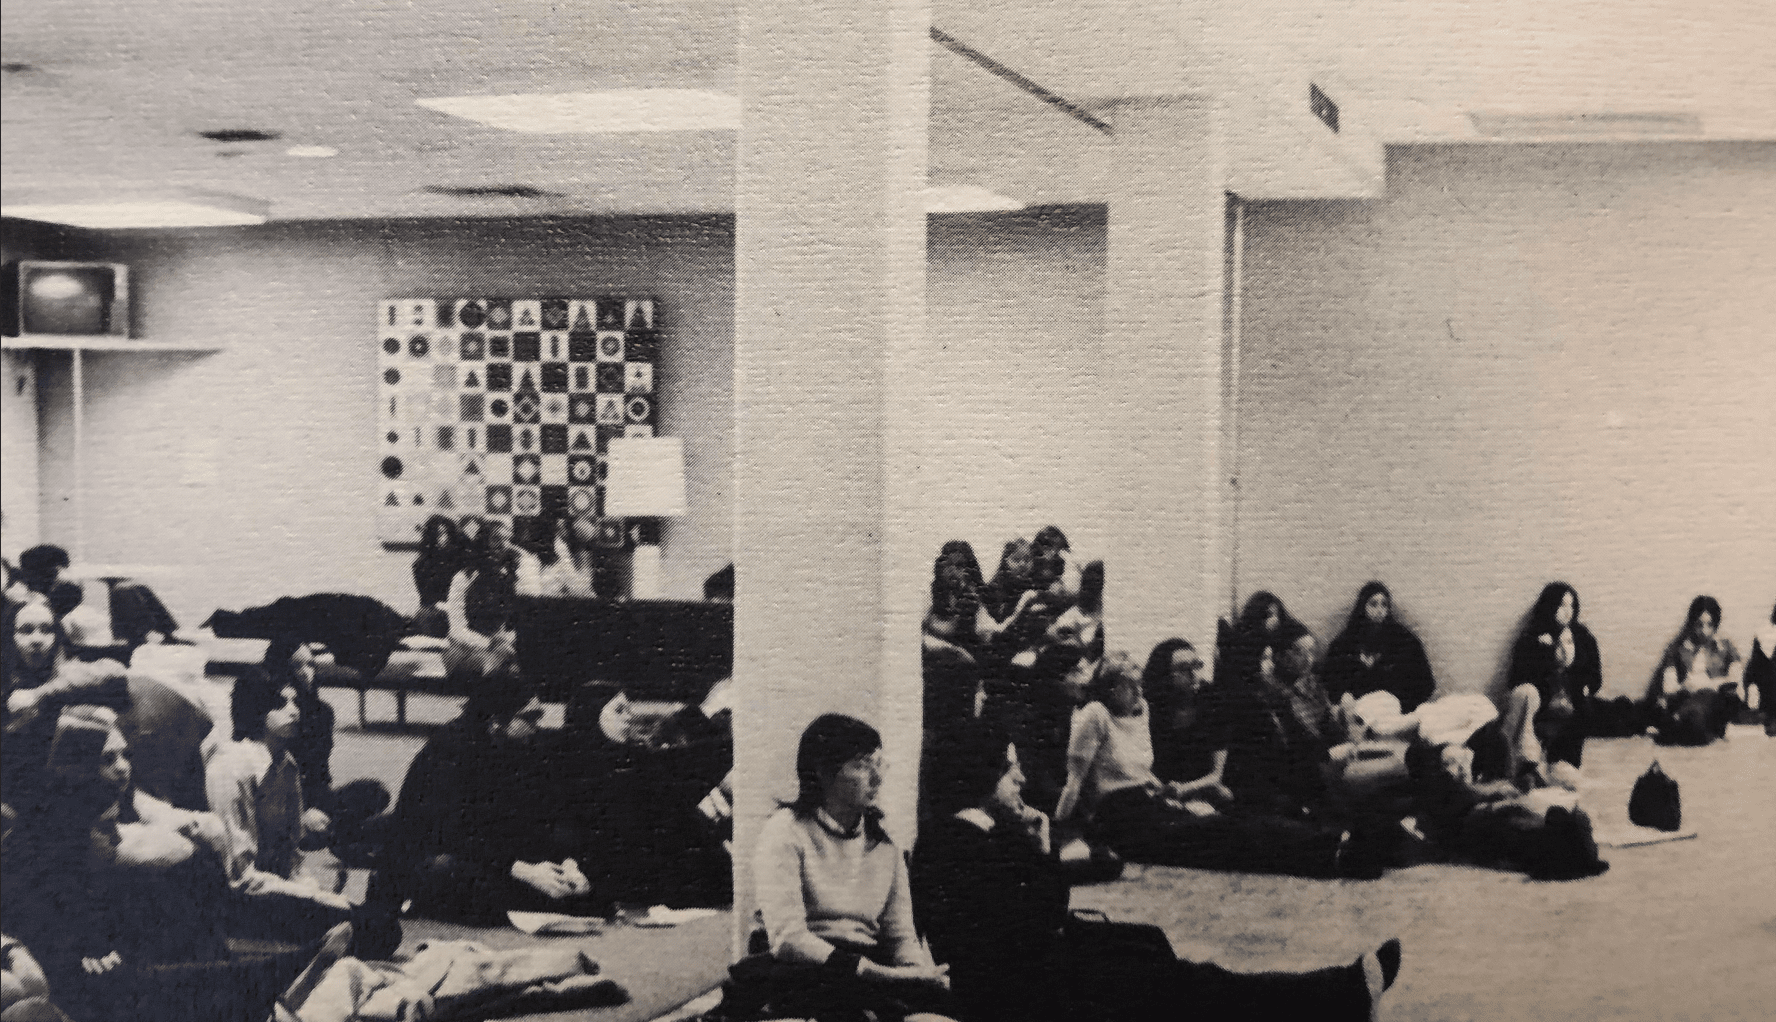 Hubert Campus Center 1970s